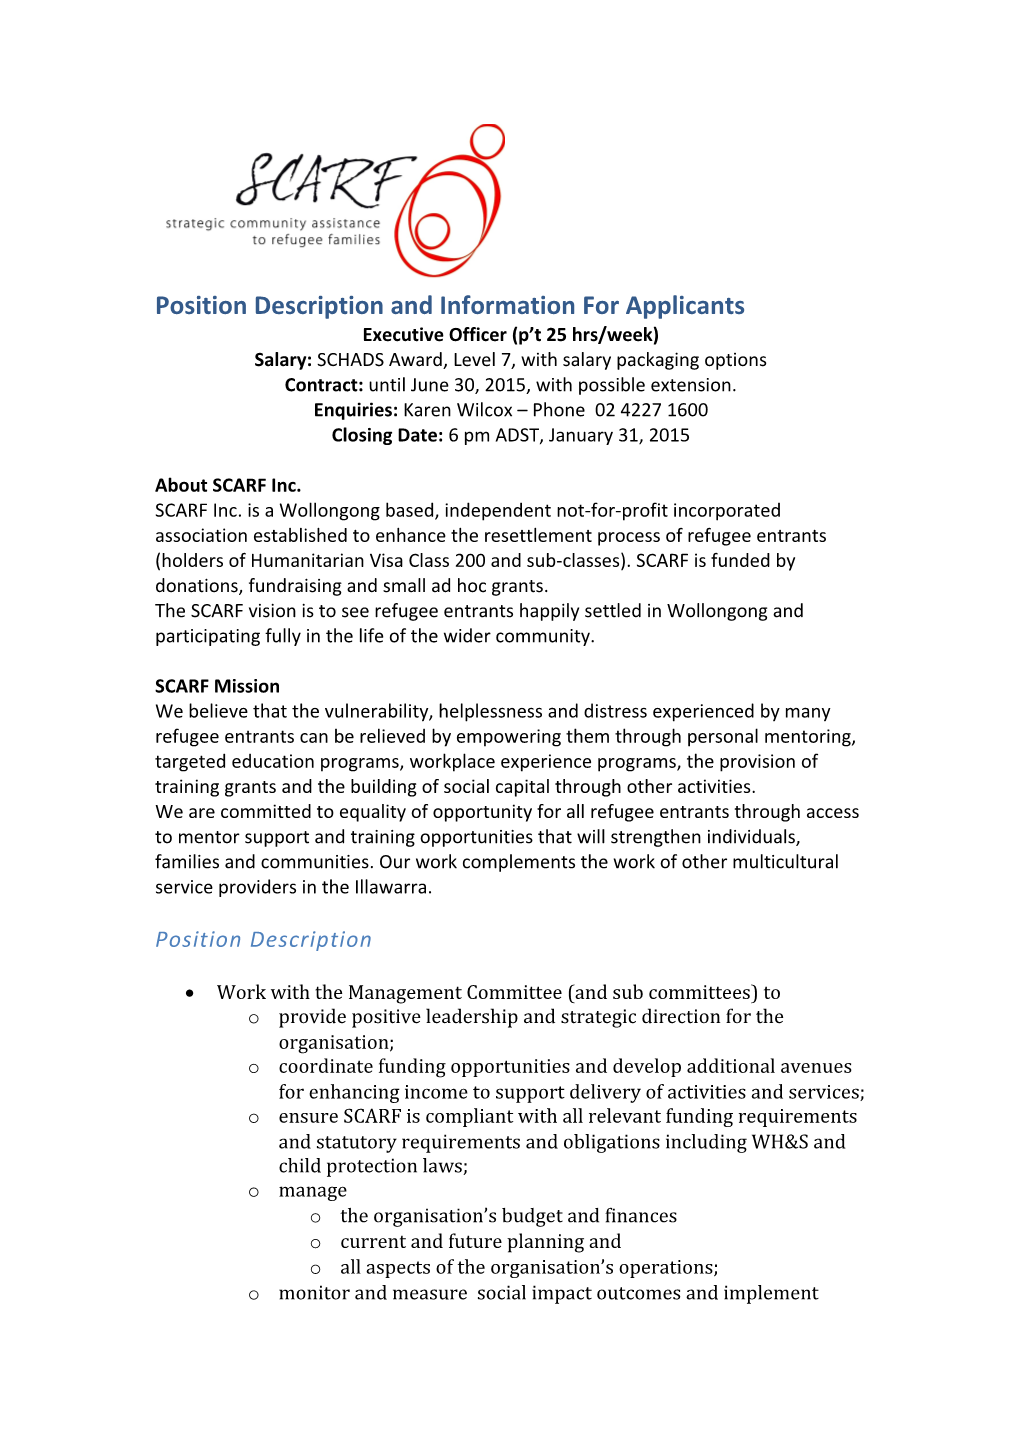 Position Description and Information for Applicants